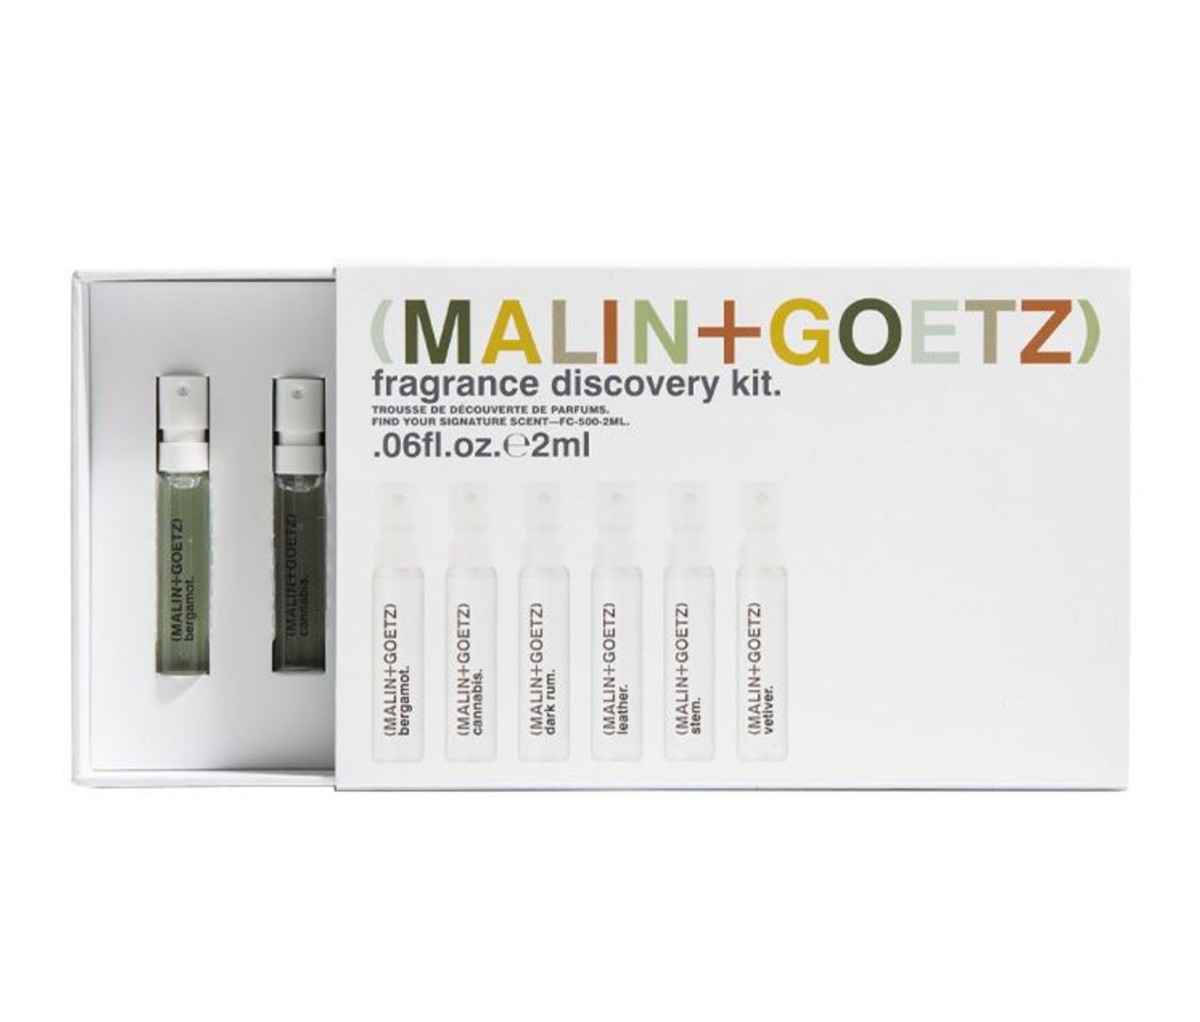 Fragrance Discovery Kit by Malin+Goetz